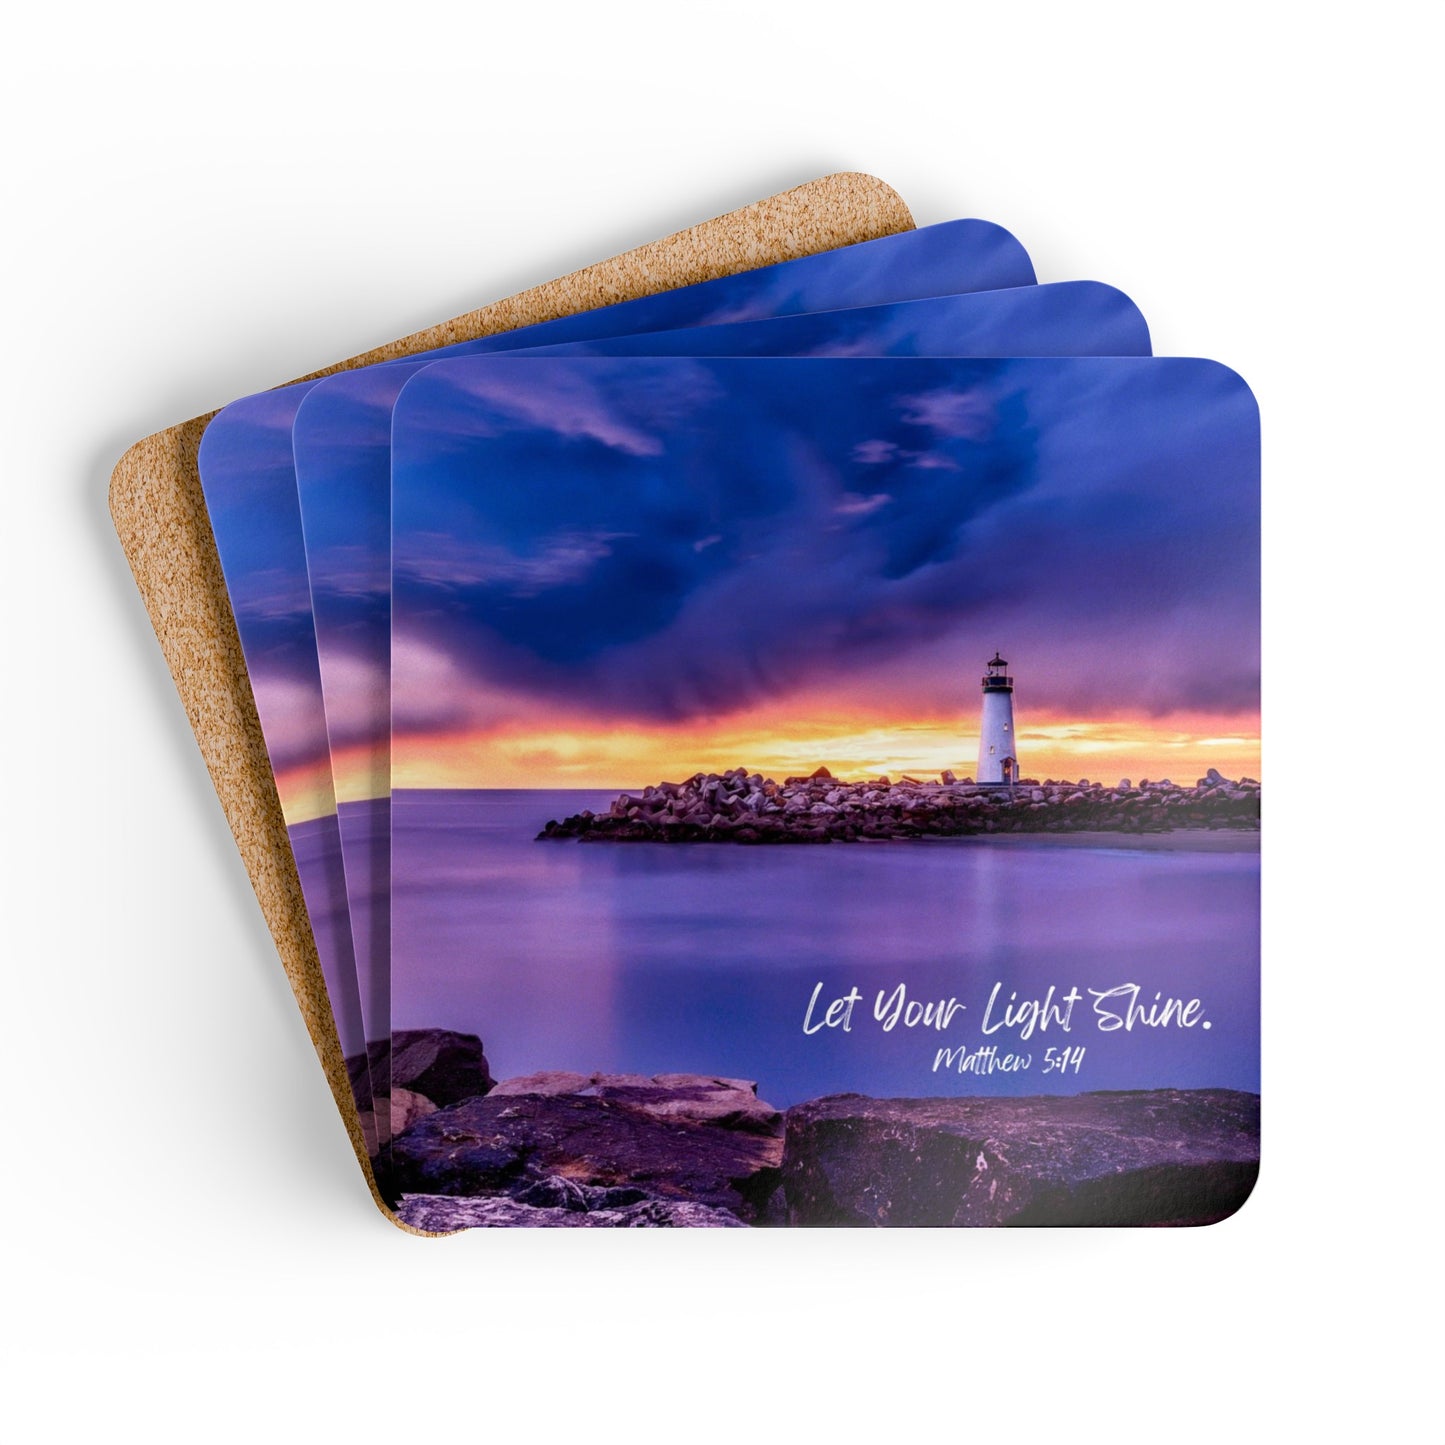 Let Your Light Shine Corkwood Coasters - Set of 4